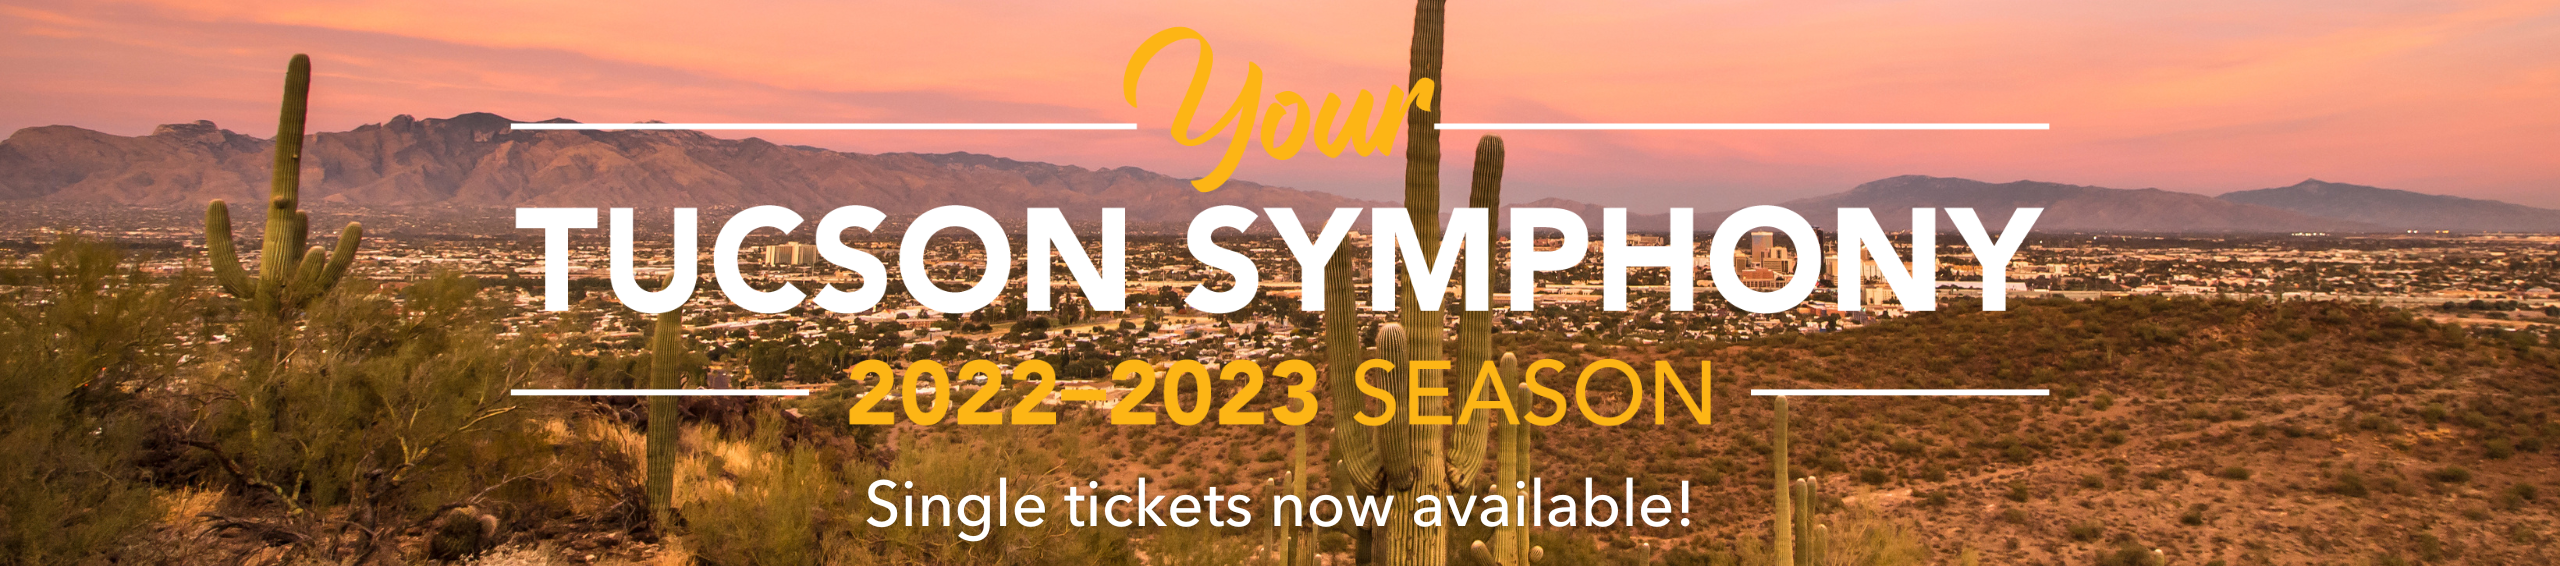 Your Tucson Symphony 2022-2023 Season